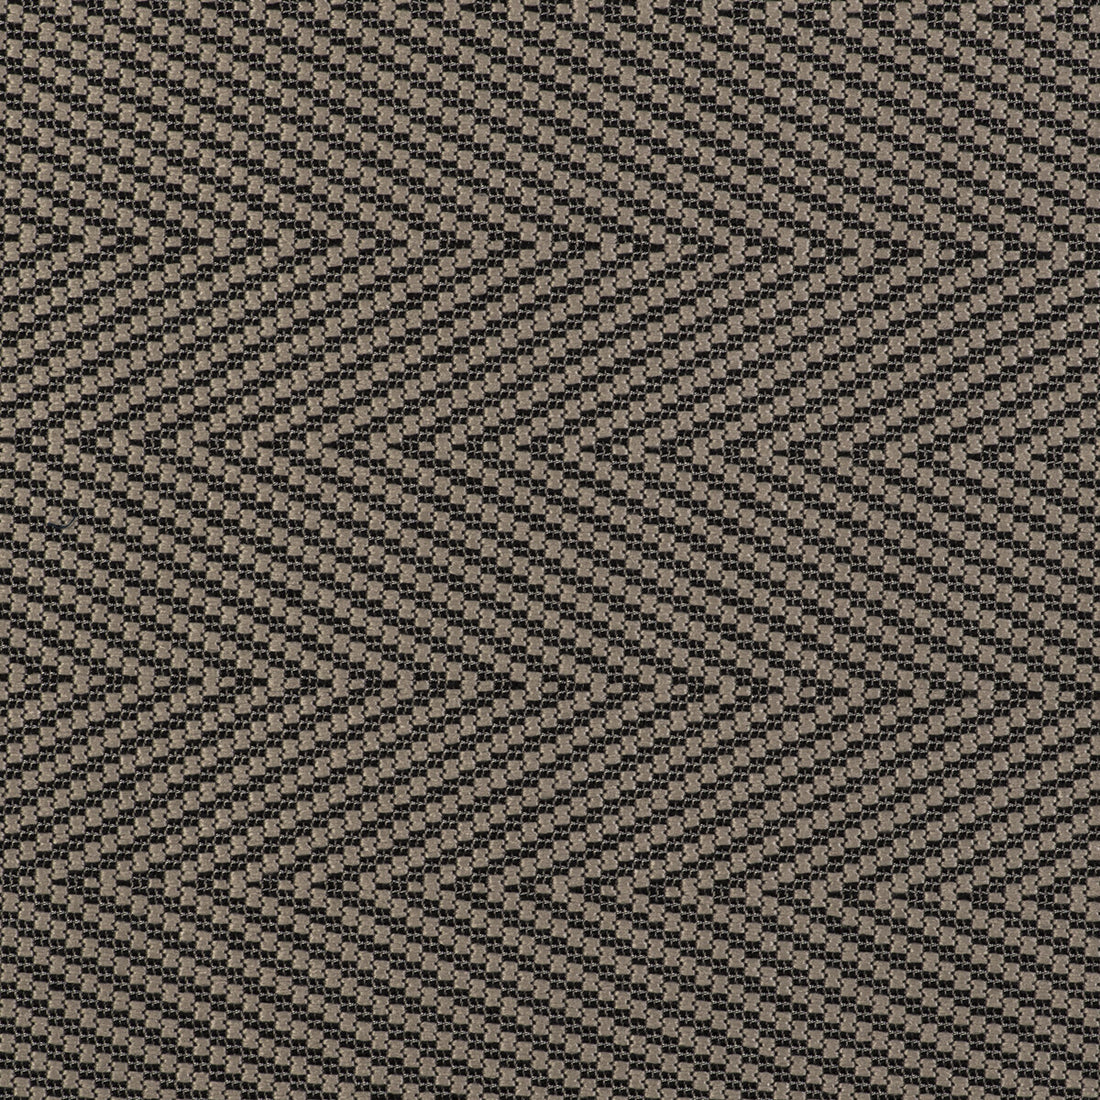 Gran Espiga fabric in lino/negro color - pattern GDT5507.004.0 - by Gaston y Daniela in the Gaston Libreria collection